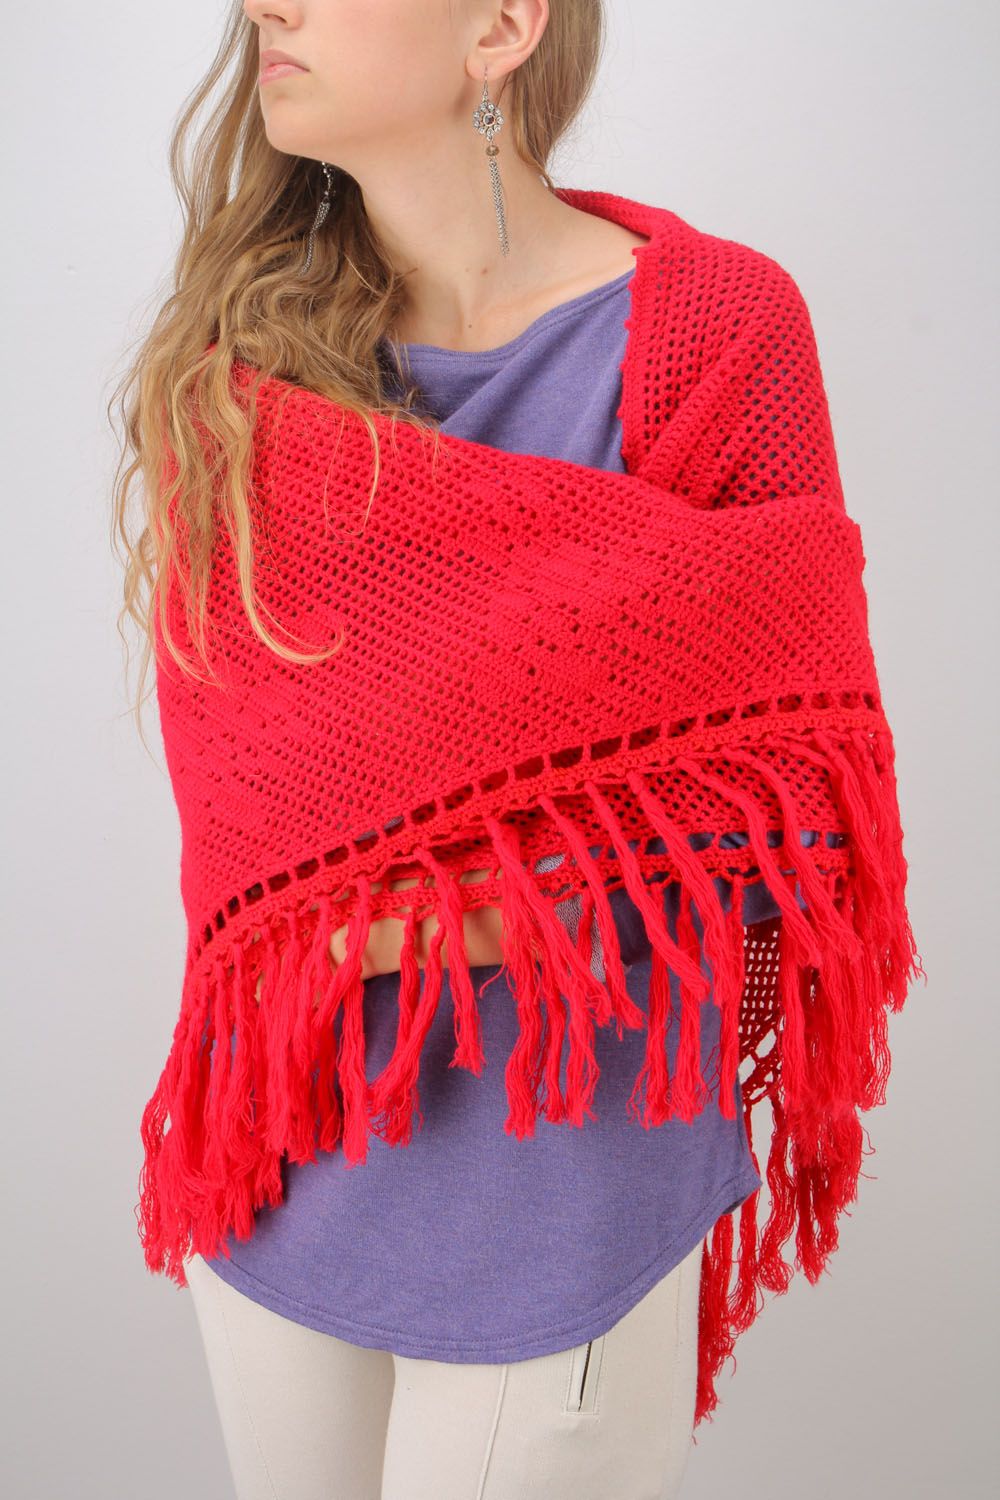 Homemade warm shawl photo 1